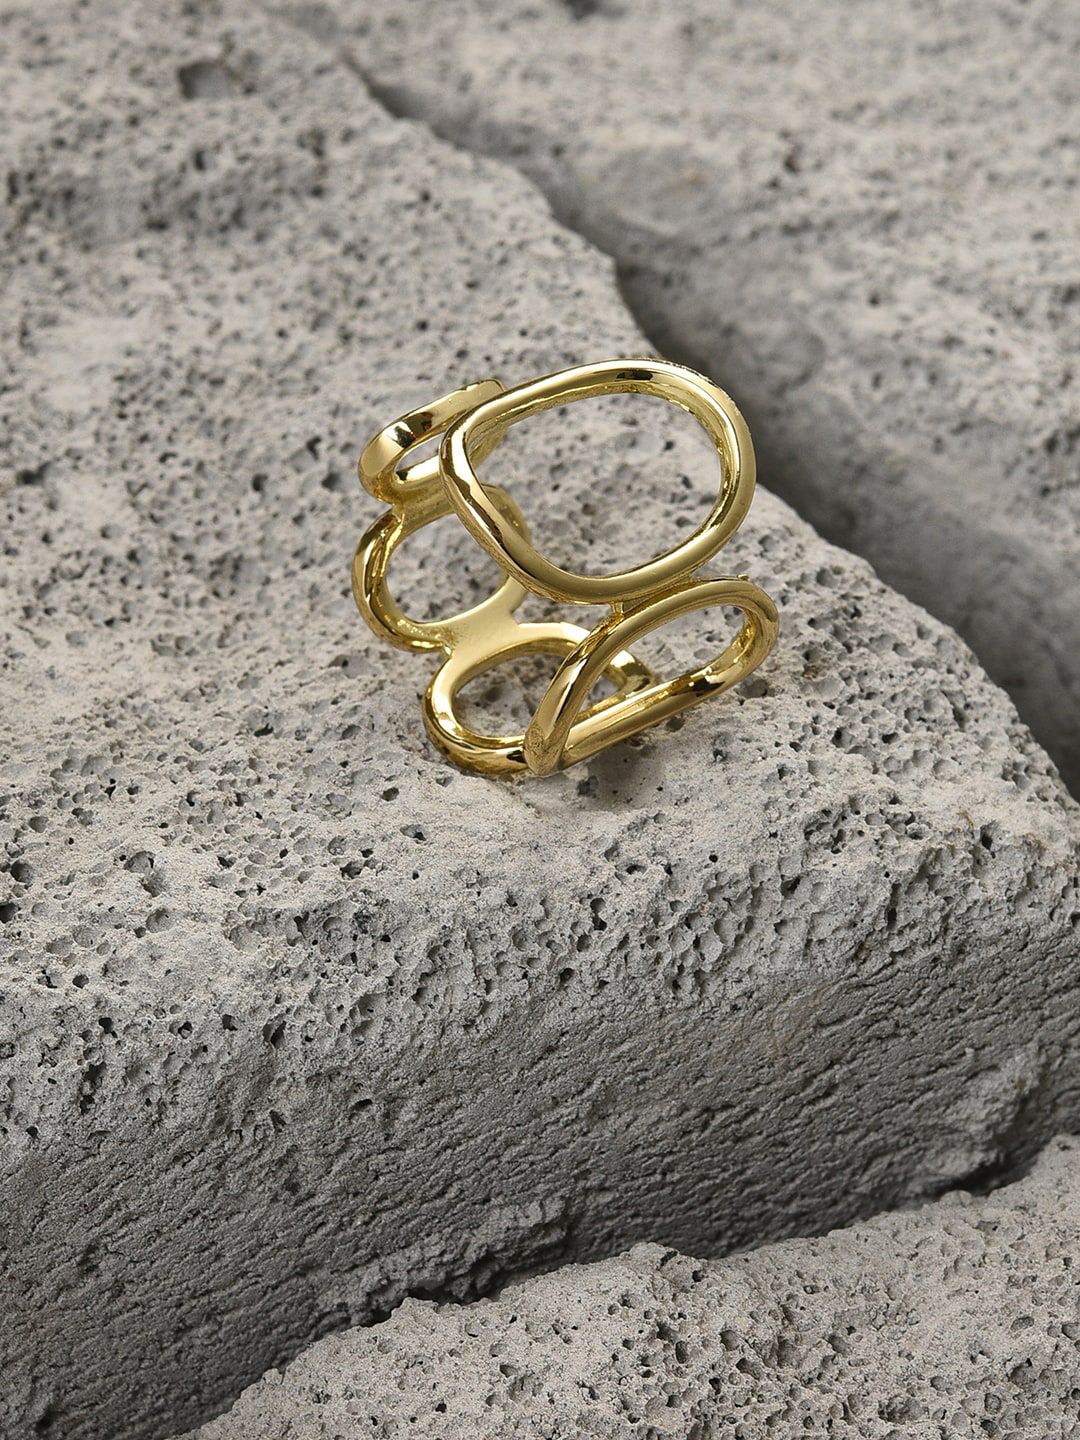 SOHI Gold-Plated Designer Ring Price in India